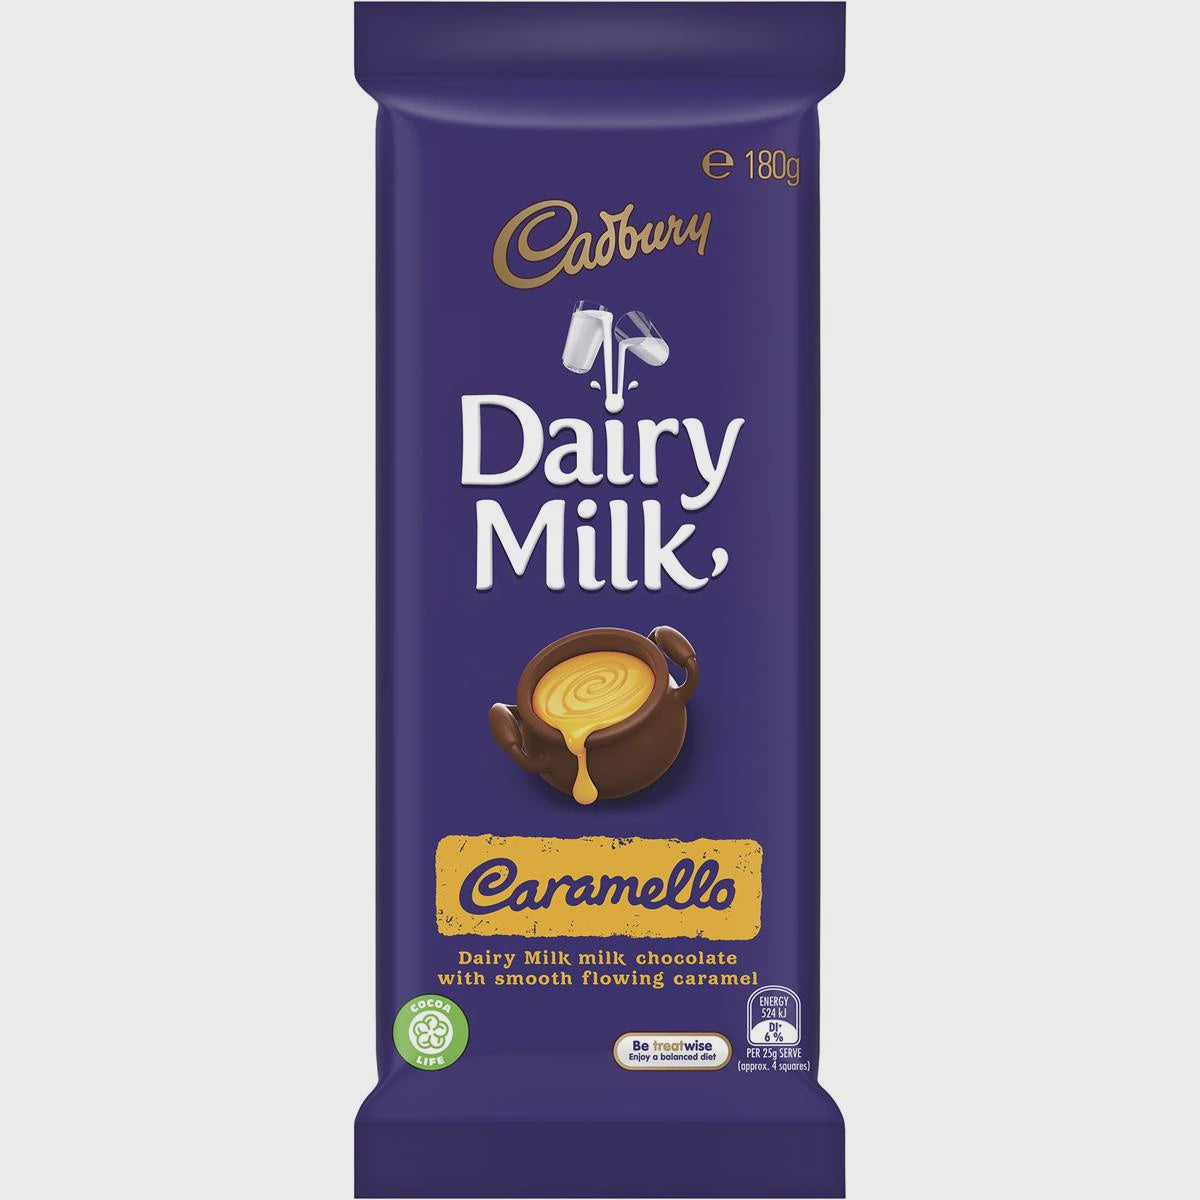 Cadbury Dairy Milk Caramello 180G